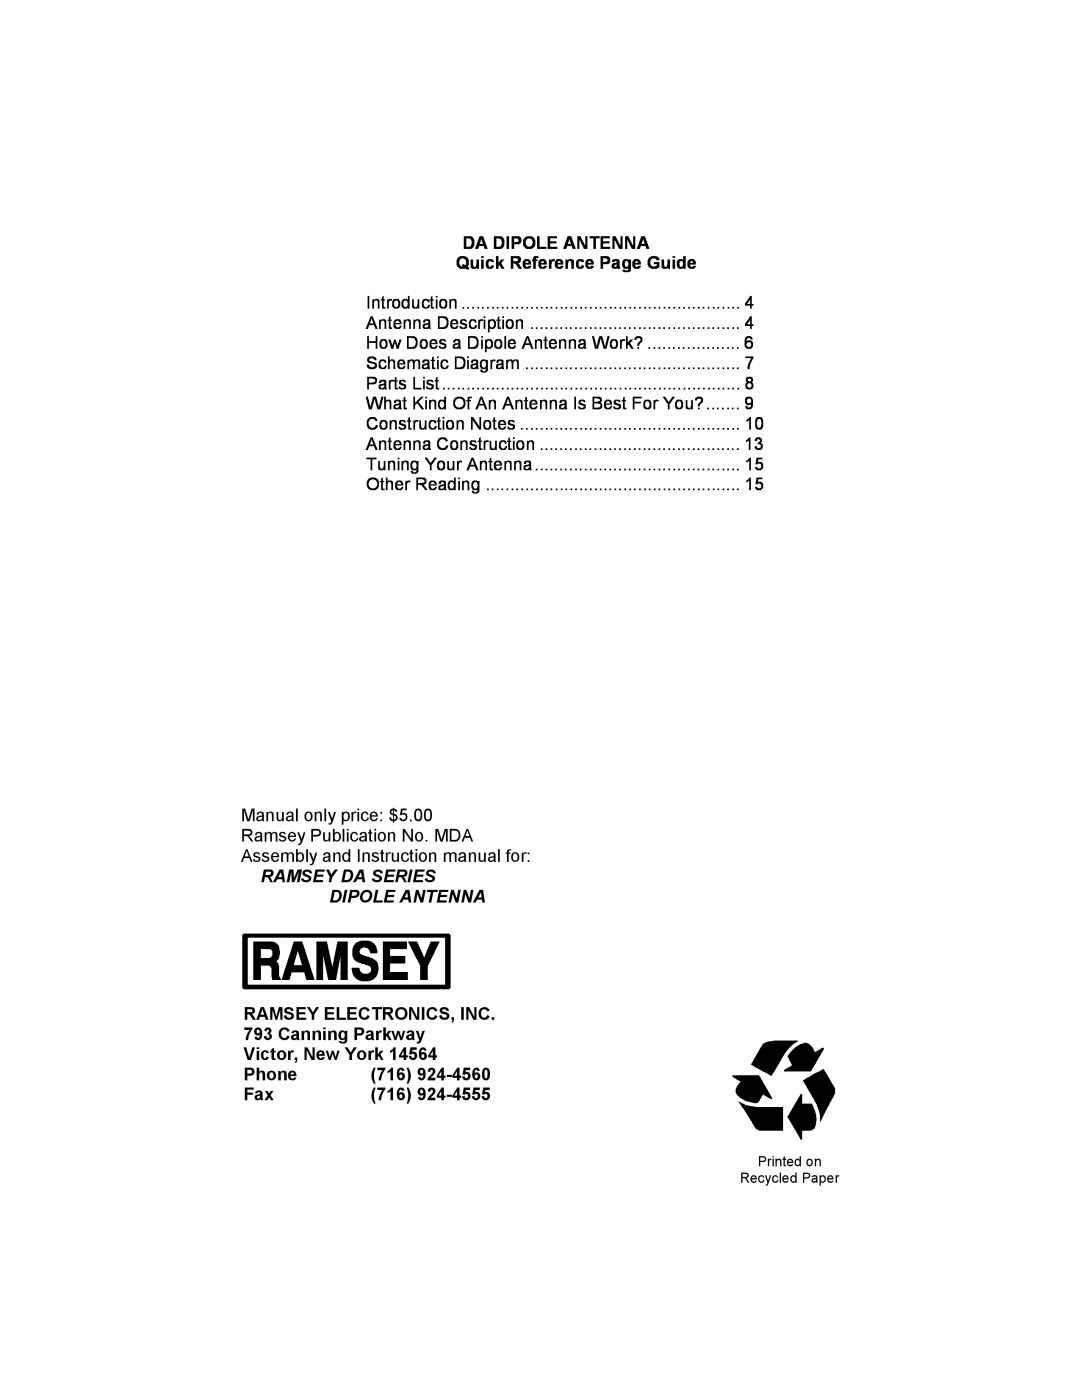 Ramsey Electronics DA-1 Ramsey Da Series Dipole Antenna, Da Dipole Antenna, Quick Reference Page Guide, Victor, New York 